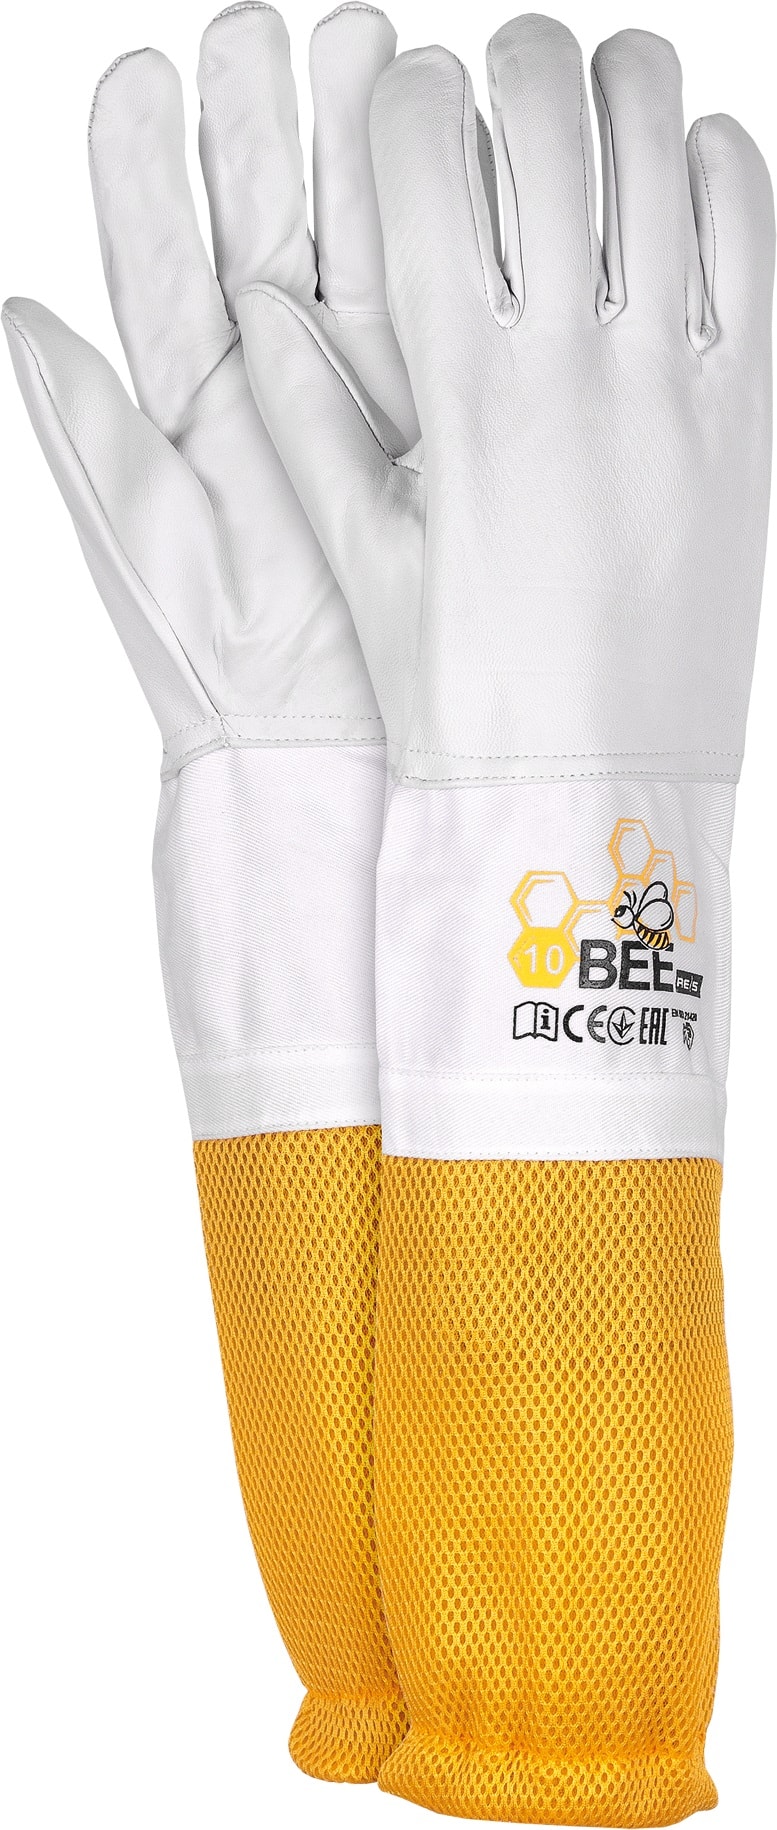 Včelárske kožené ochranné rukavice BEE